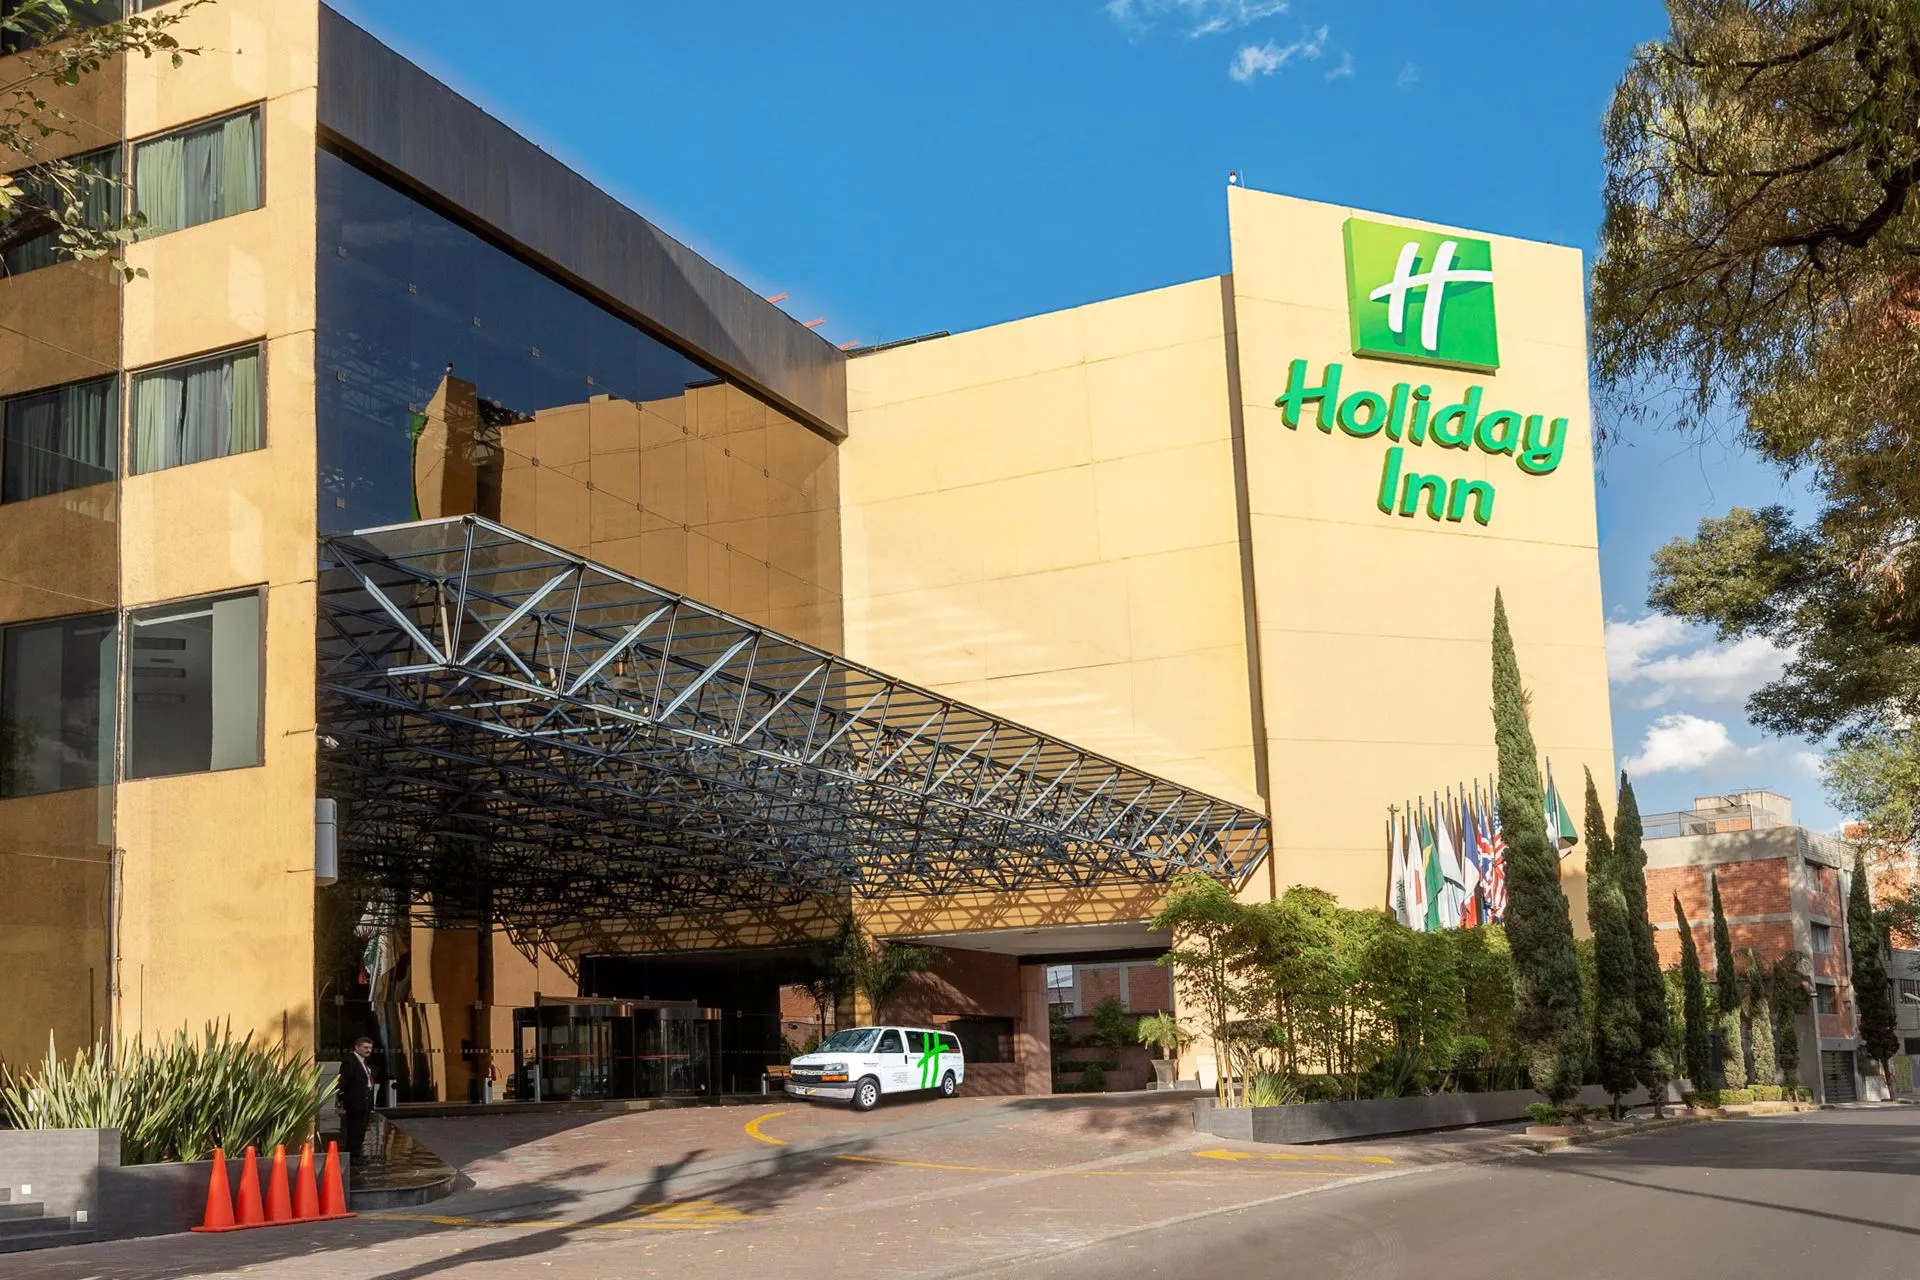 Holiday Inn operará el primer hotel del Aeropuerto Felipe Ángeles